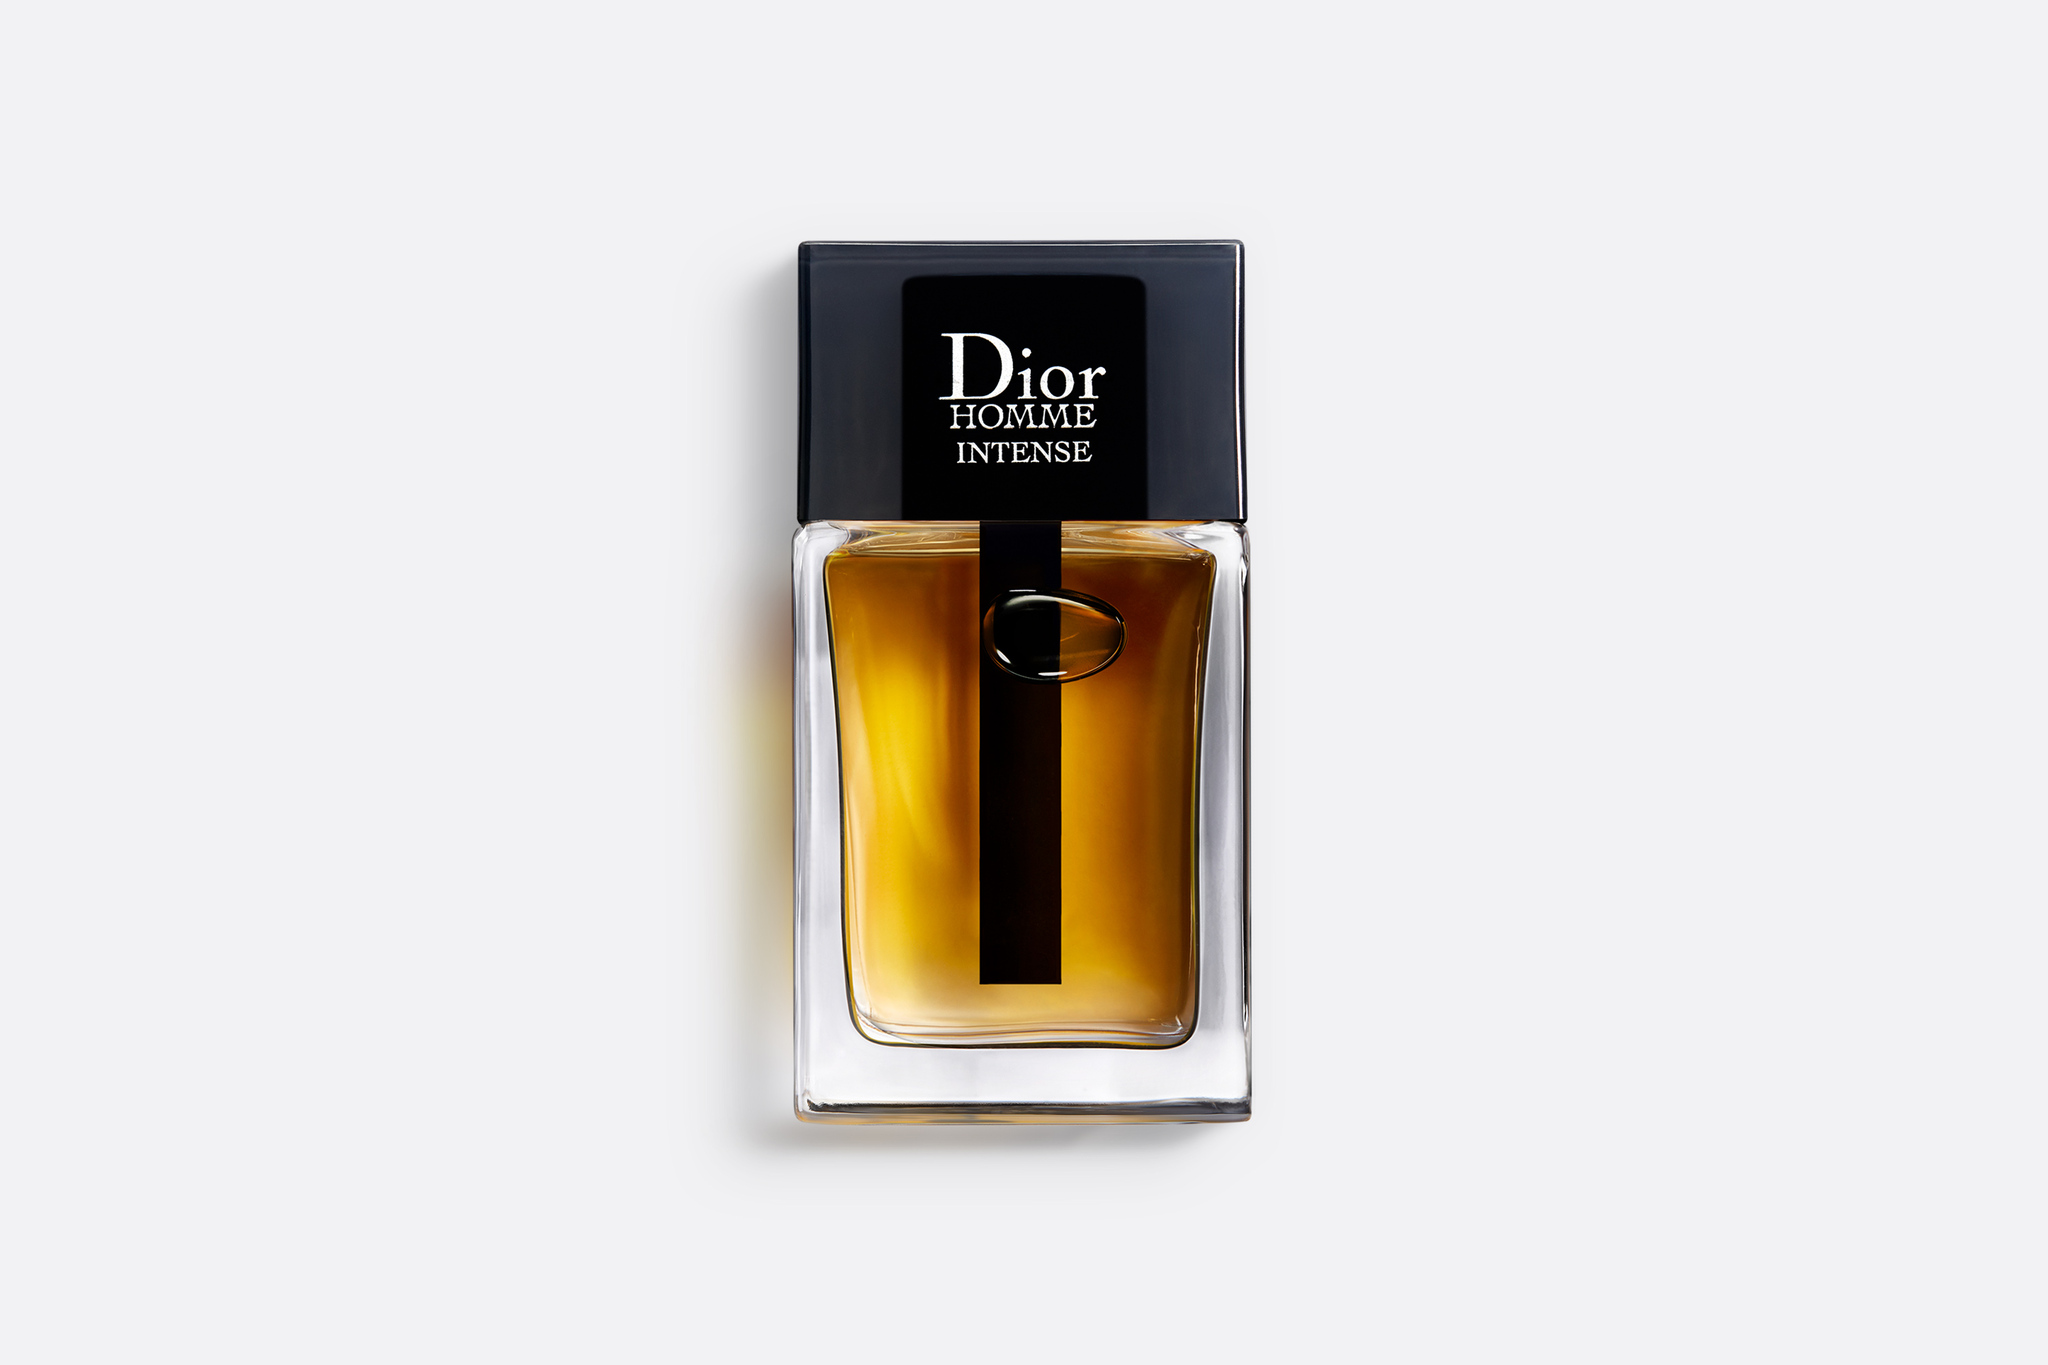 Dior Homme Sport  купить по цене 6800 рублей  Туалетная вода Dior Homme  Sport объем 50 мл  Отзывы